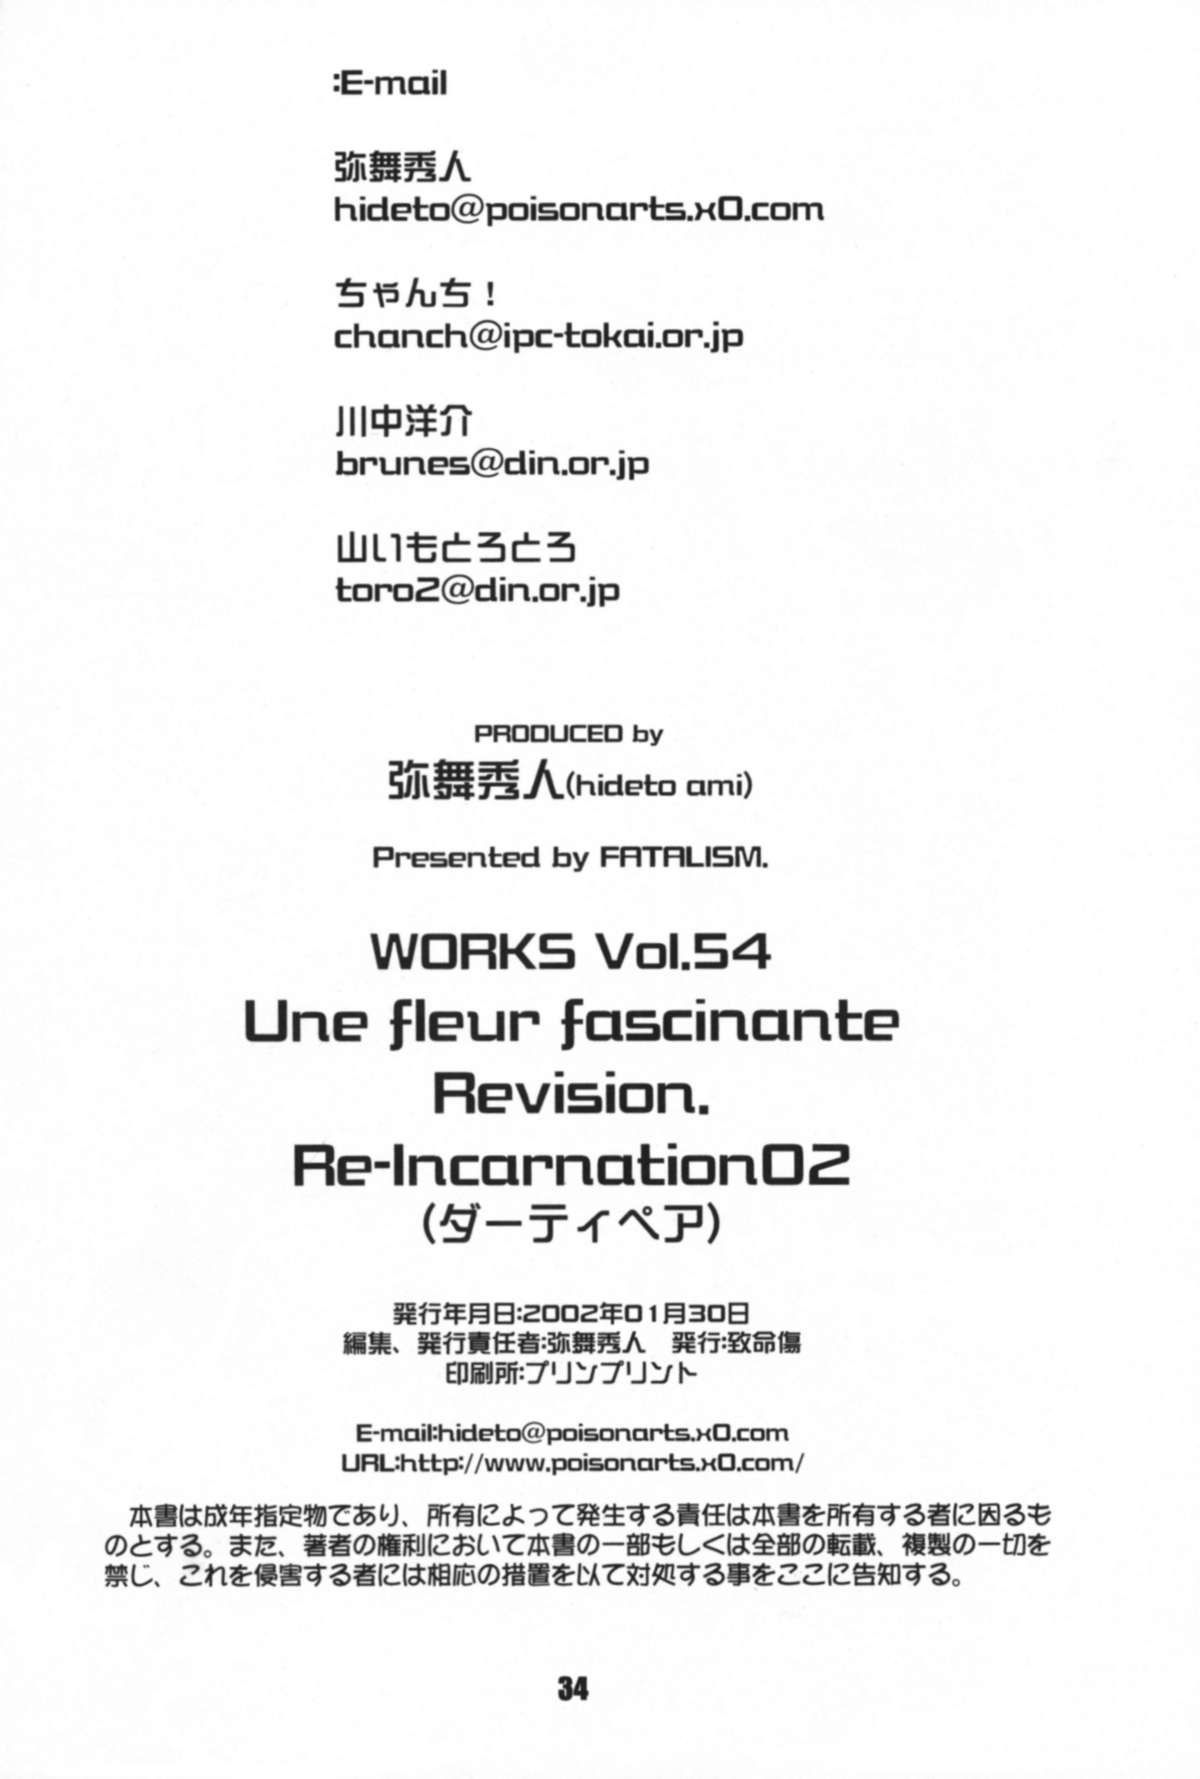 [Fatalism works (弥舞秀人)] WORKS Vol.54 Une fleur fascinante. Revision.(ダーティペア)